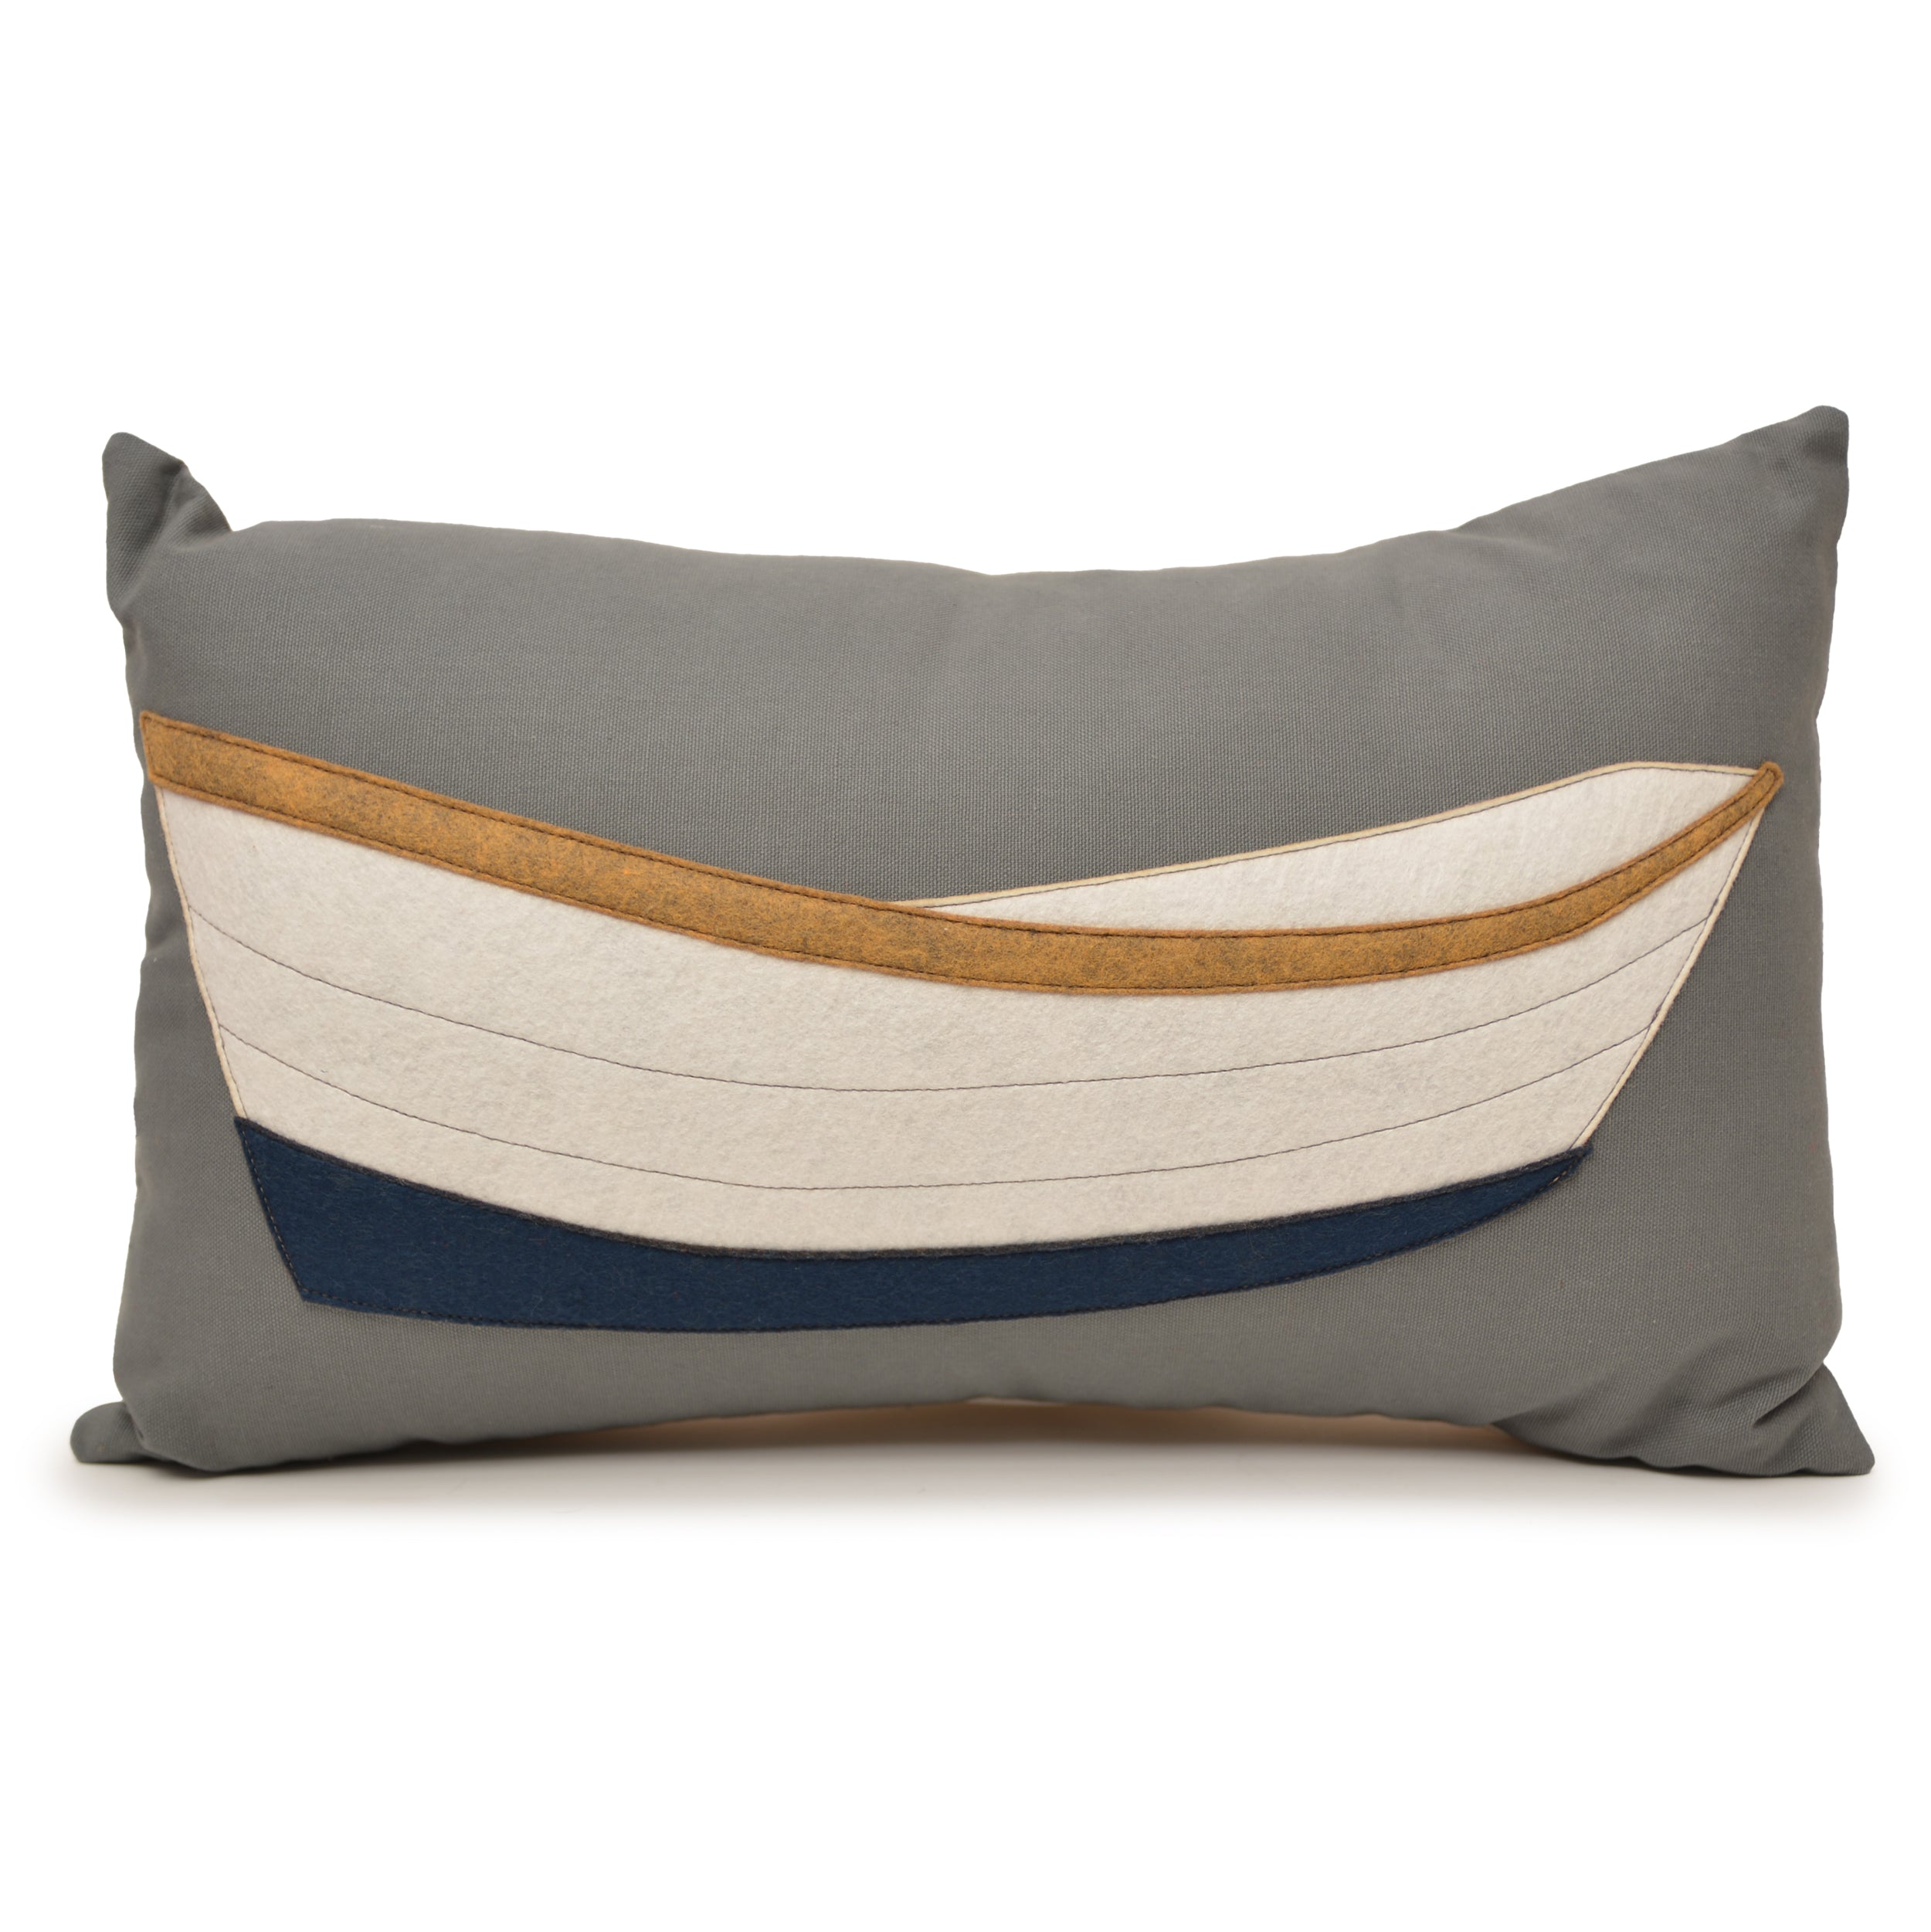 14X21" DORY boat lumbar pillow - white on grey